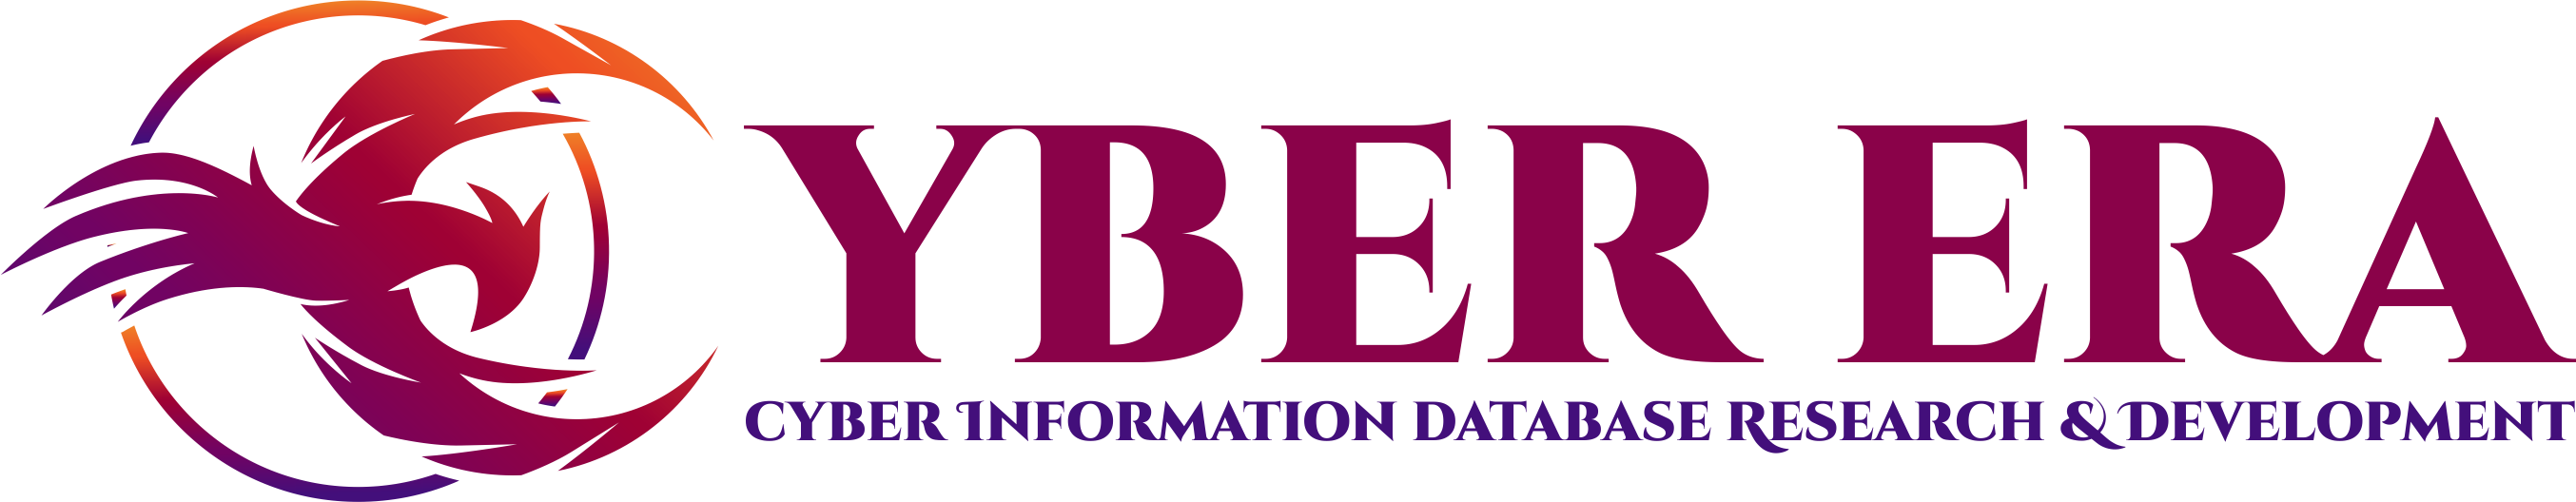 CyberEra - Cyber Information Database Research & Development